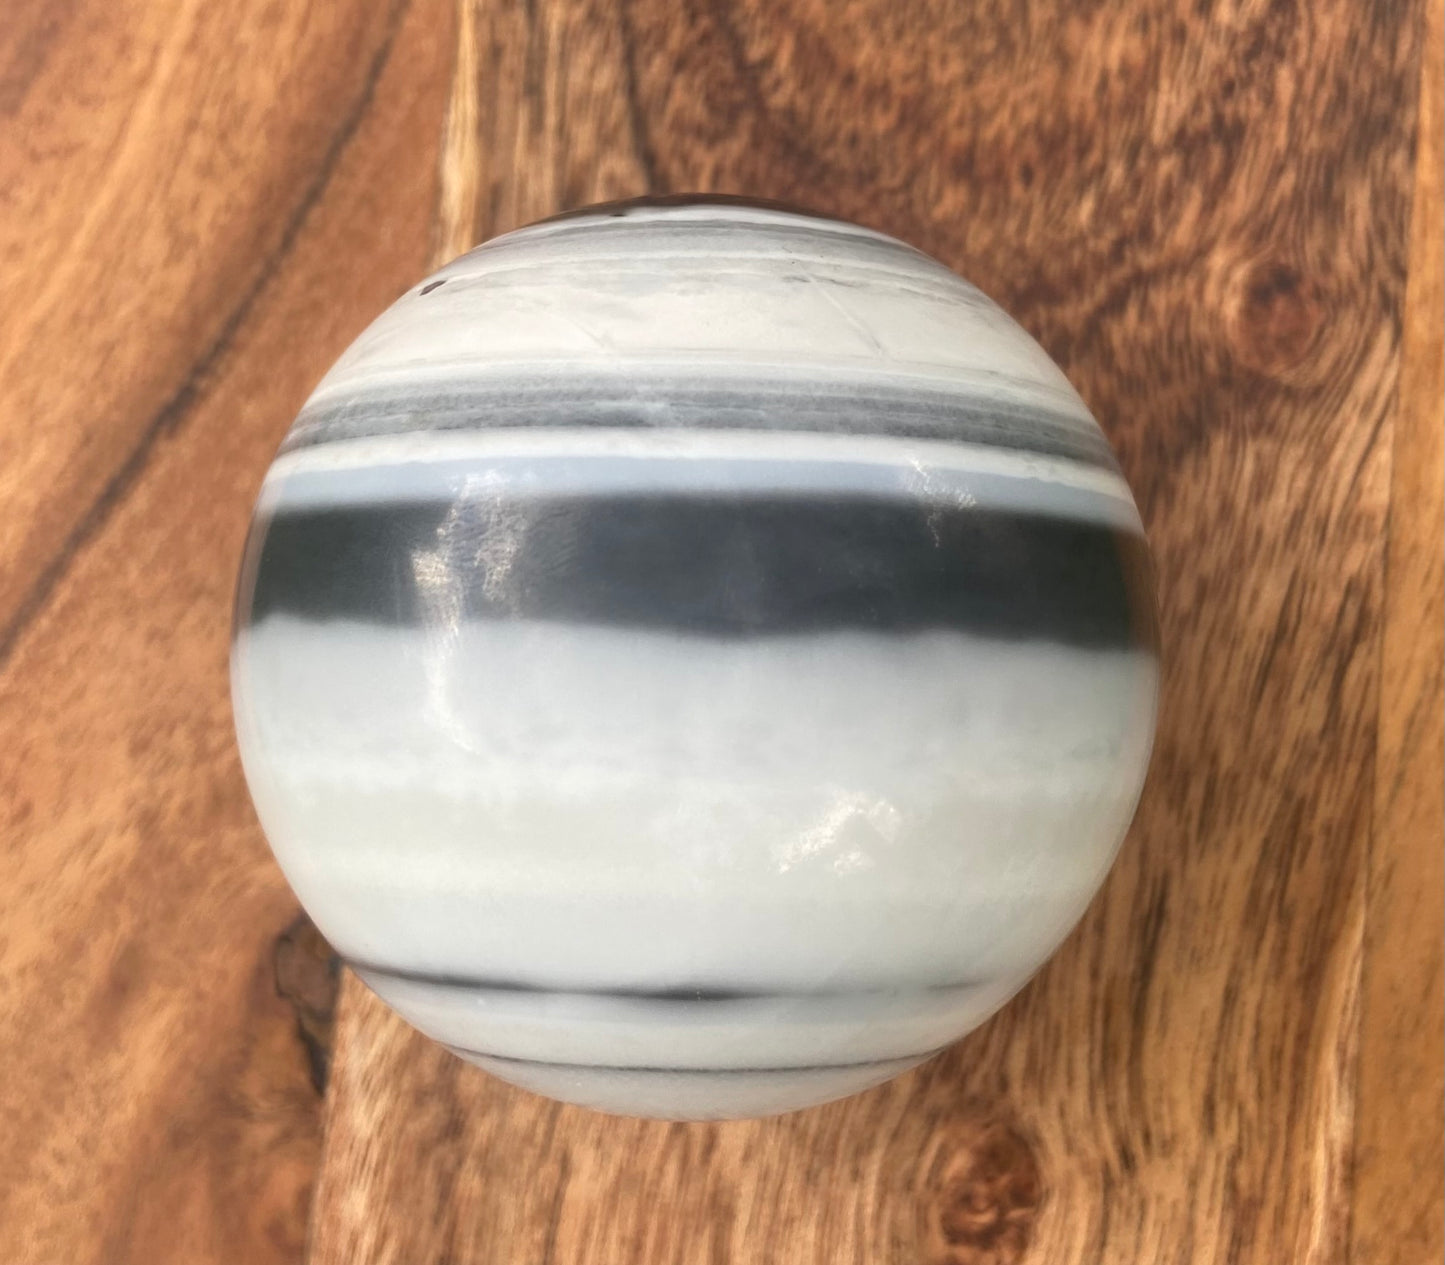 Taiji Stone Sphere